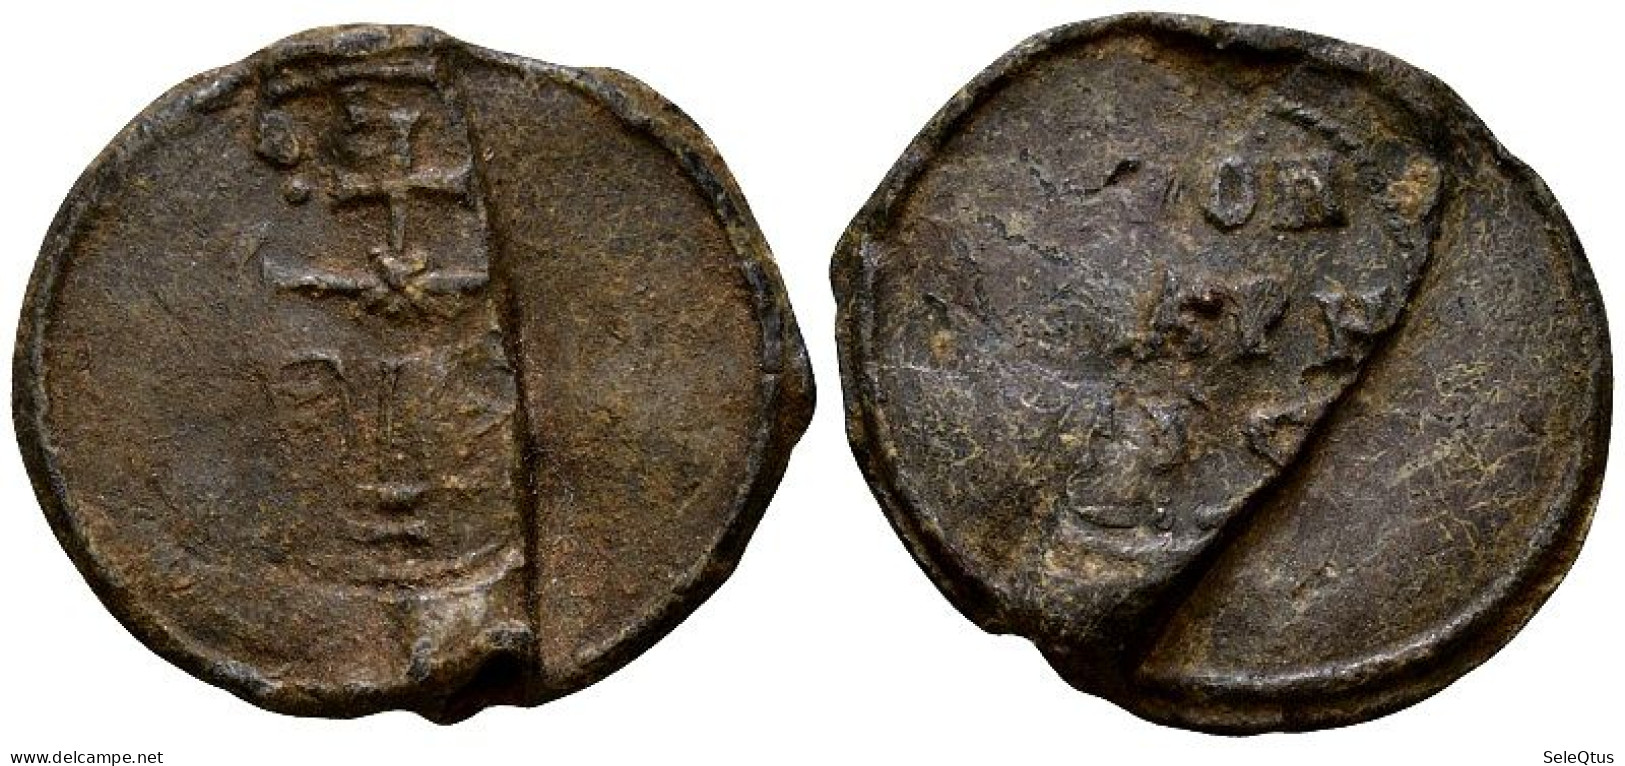 Sellos Antiguos - Ancient Seals (00130-007-1105) - Antike Werkzeuge